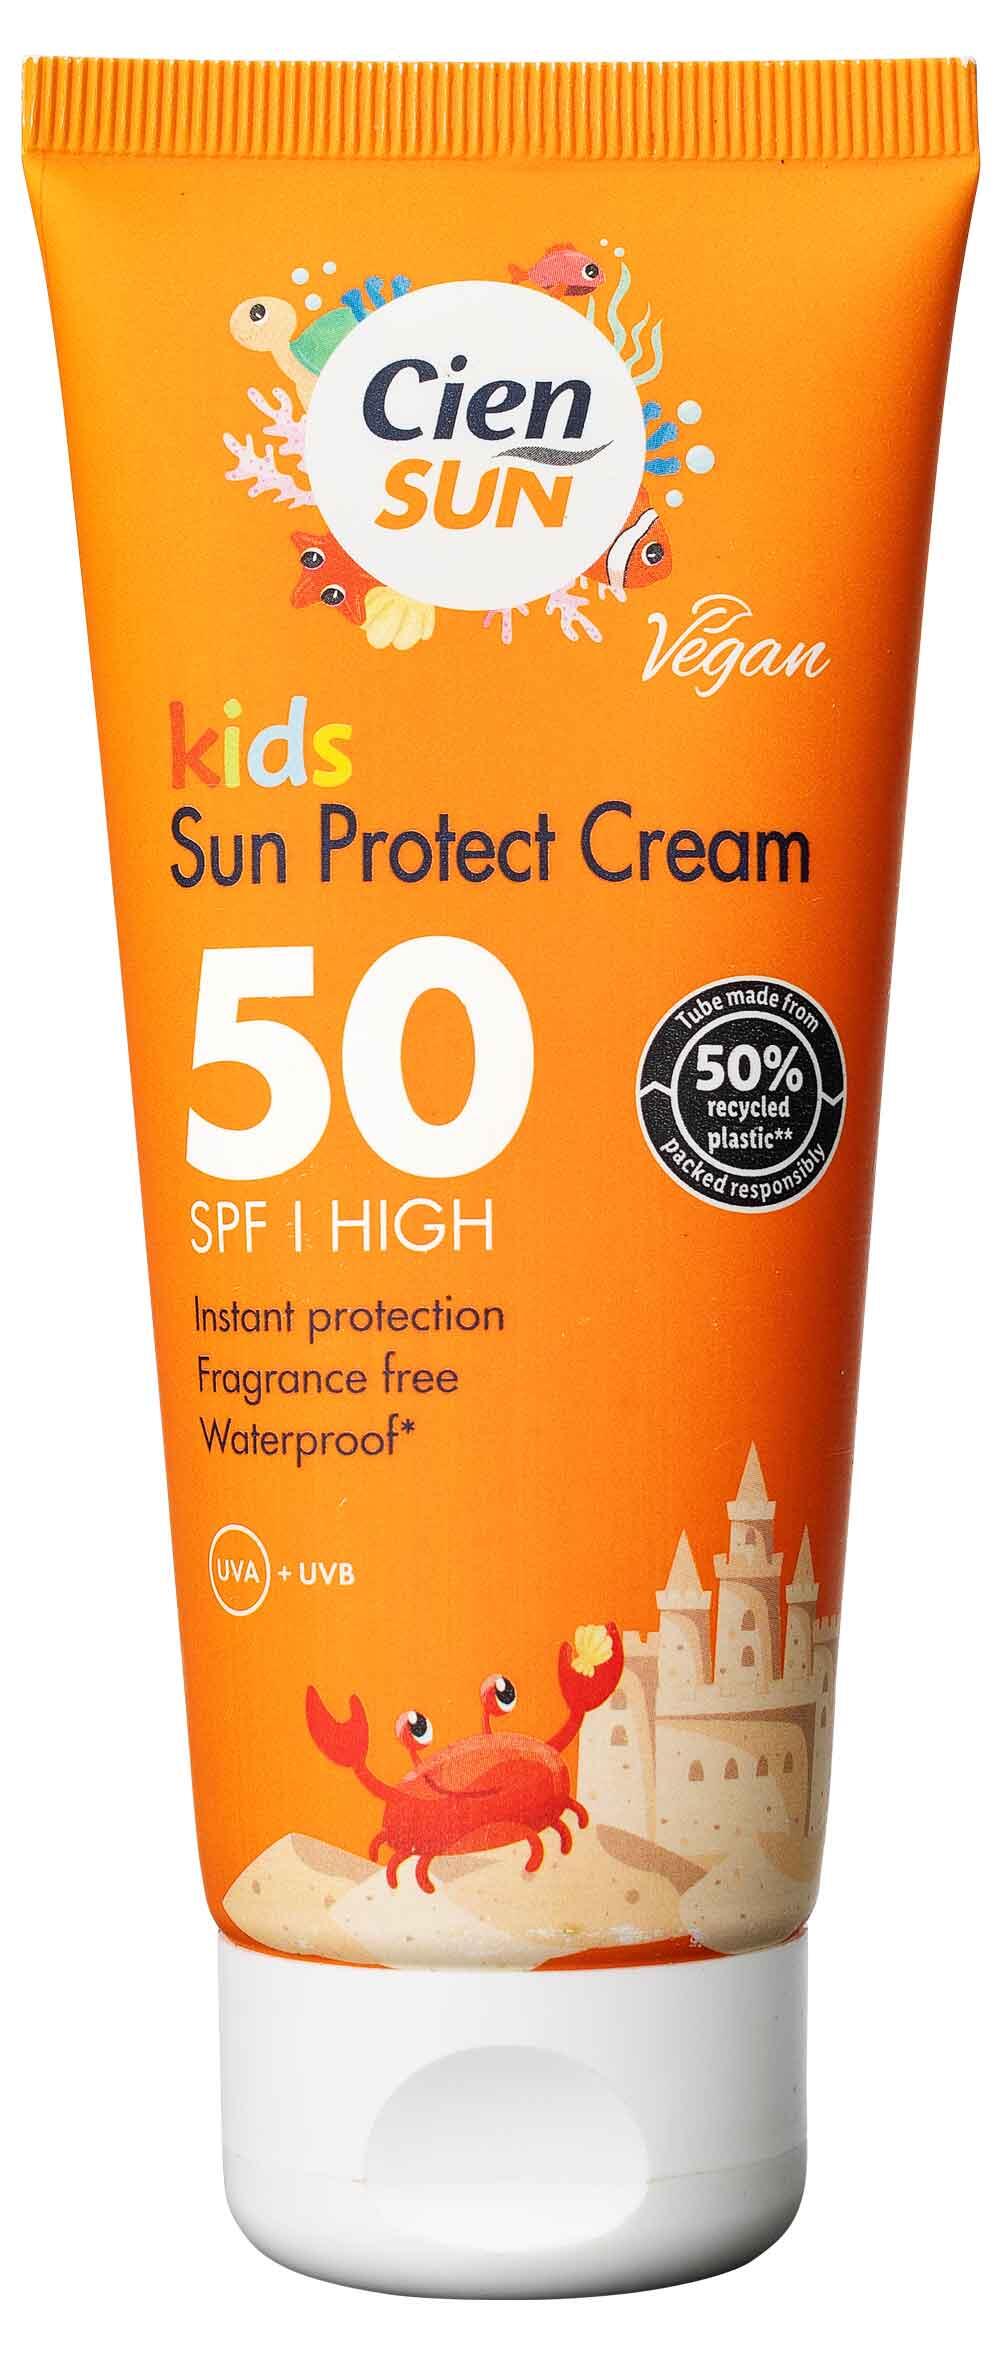 Kids sun protect cream SPF 50 Cien sun (Lidl)